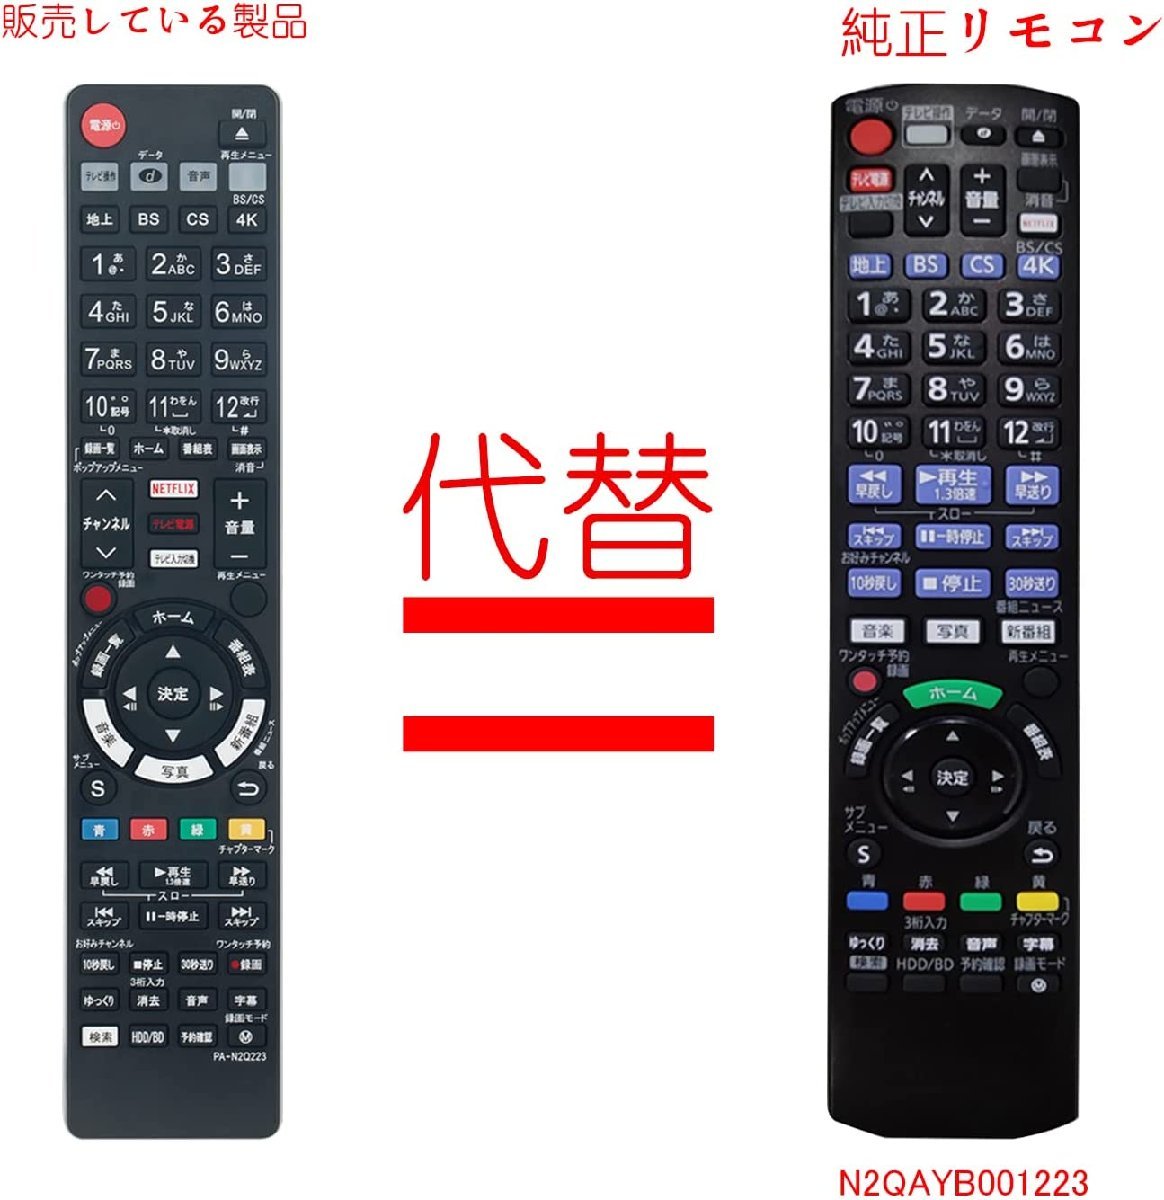  Panasonic Blue-ray DVD recorder remote control N2QAYB001223ti-ga substitution remote control Panasonic DIGA